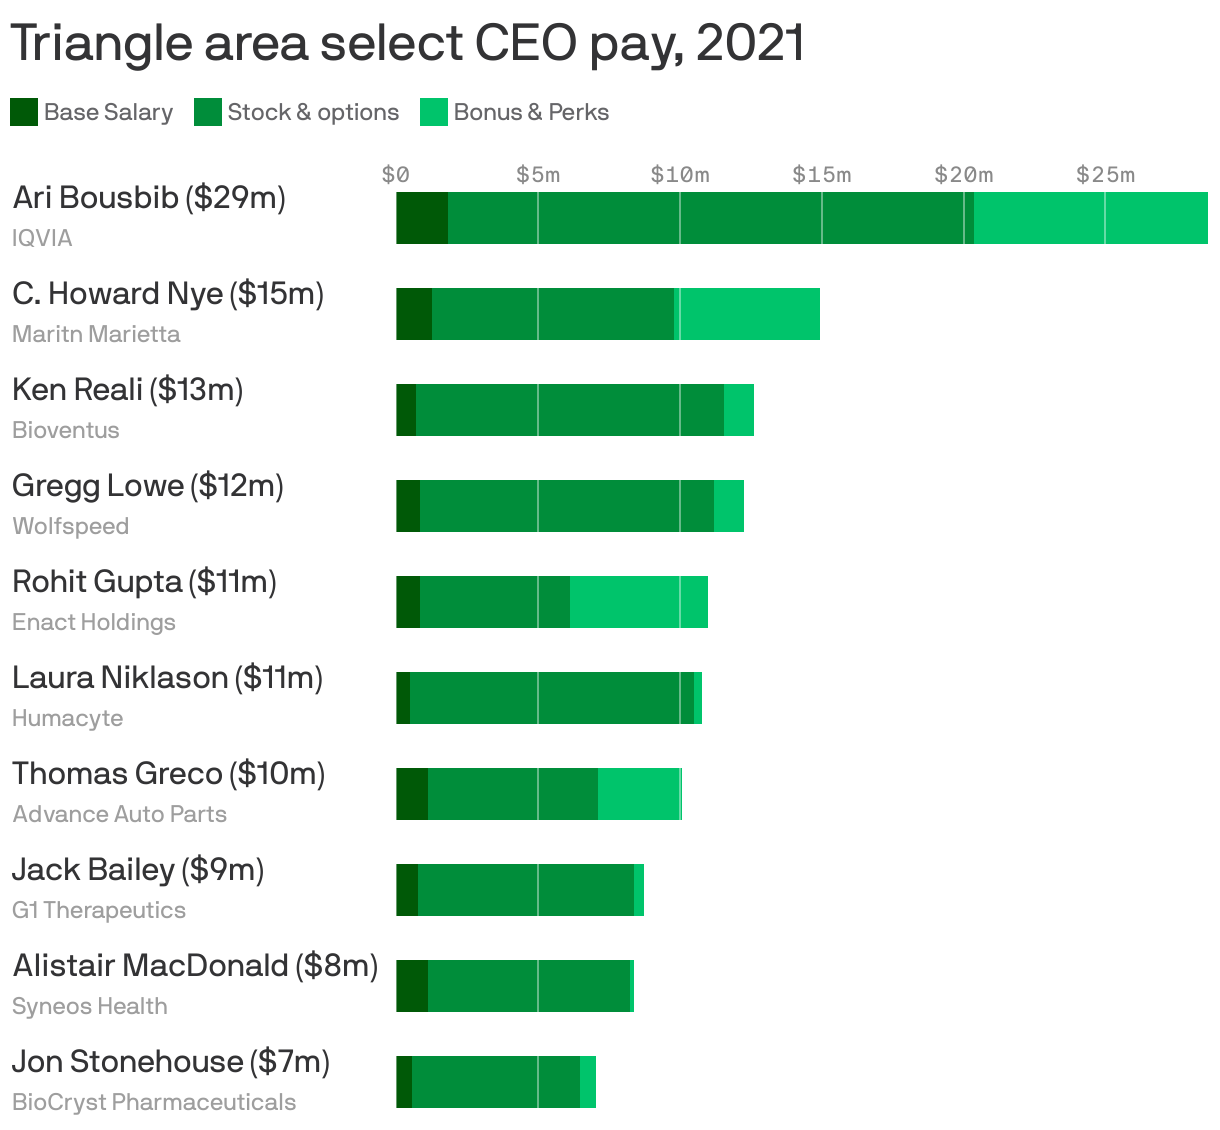 Triangle area select CEO pay, 2021